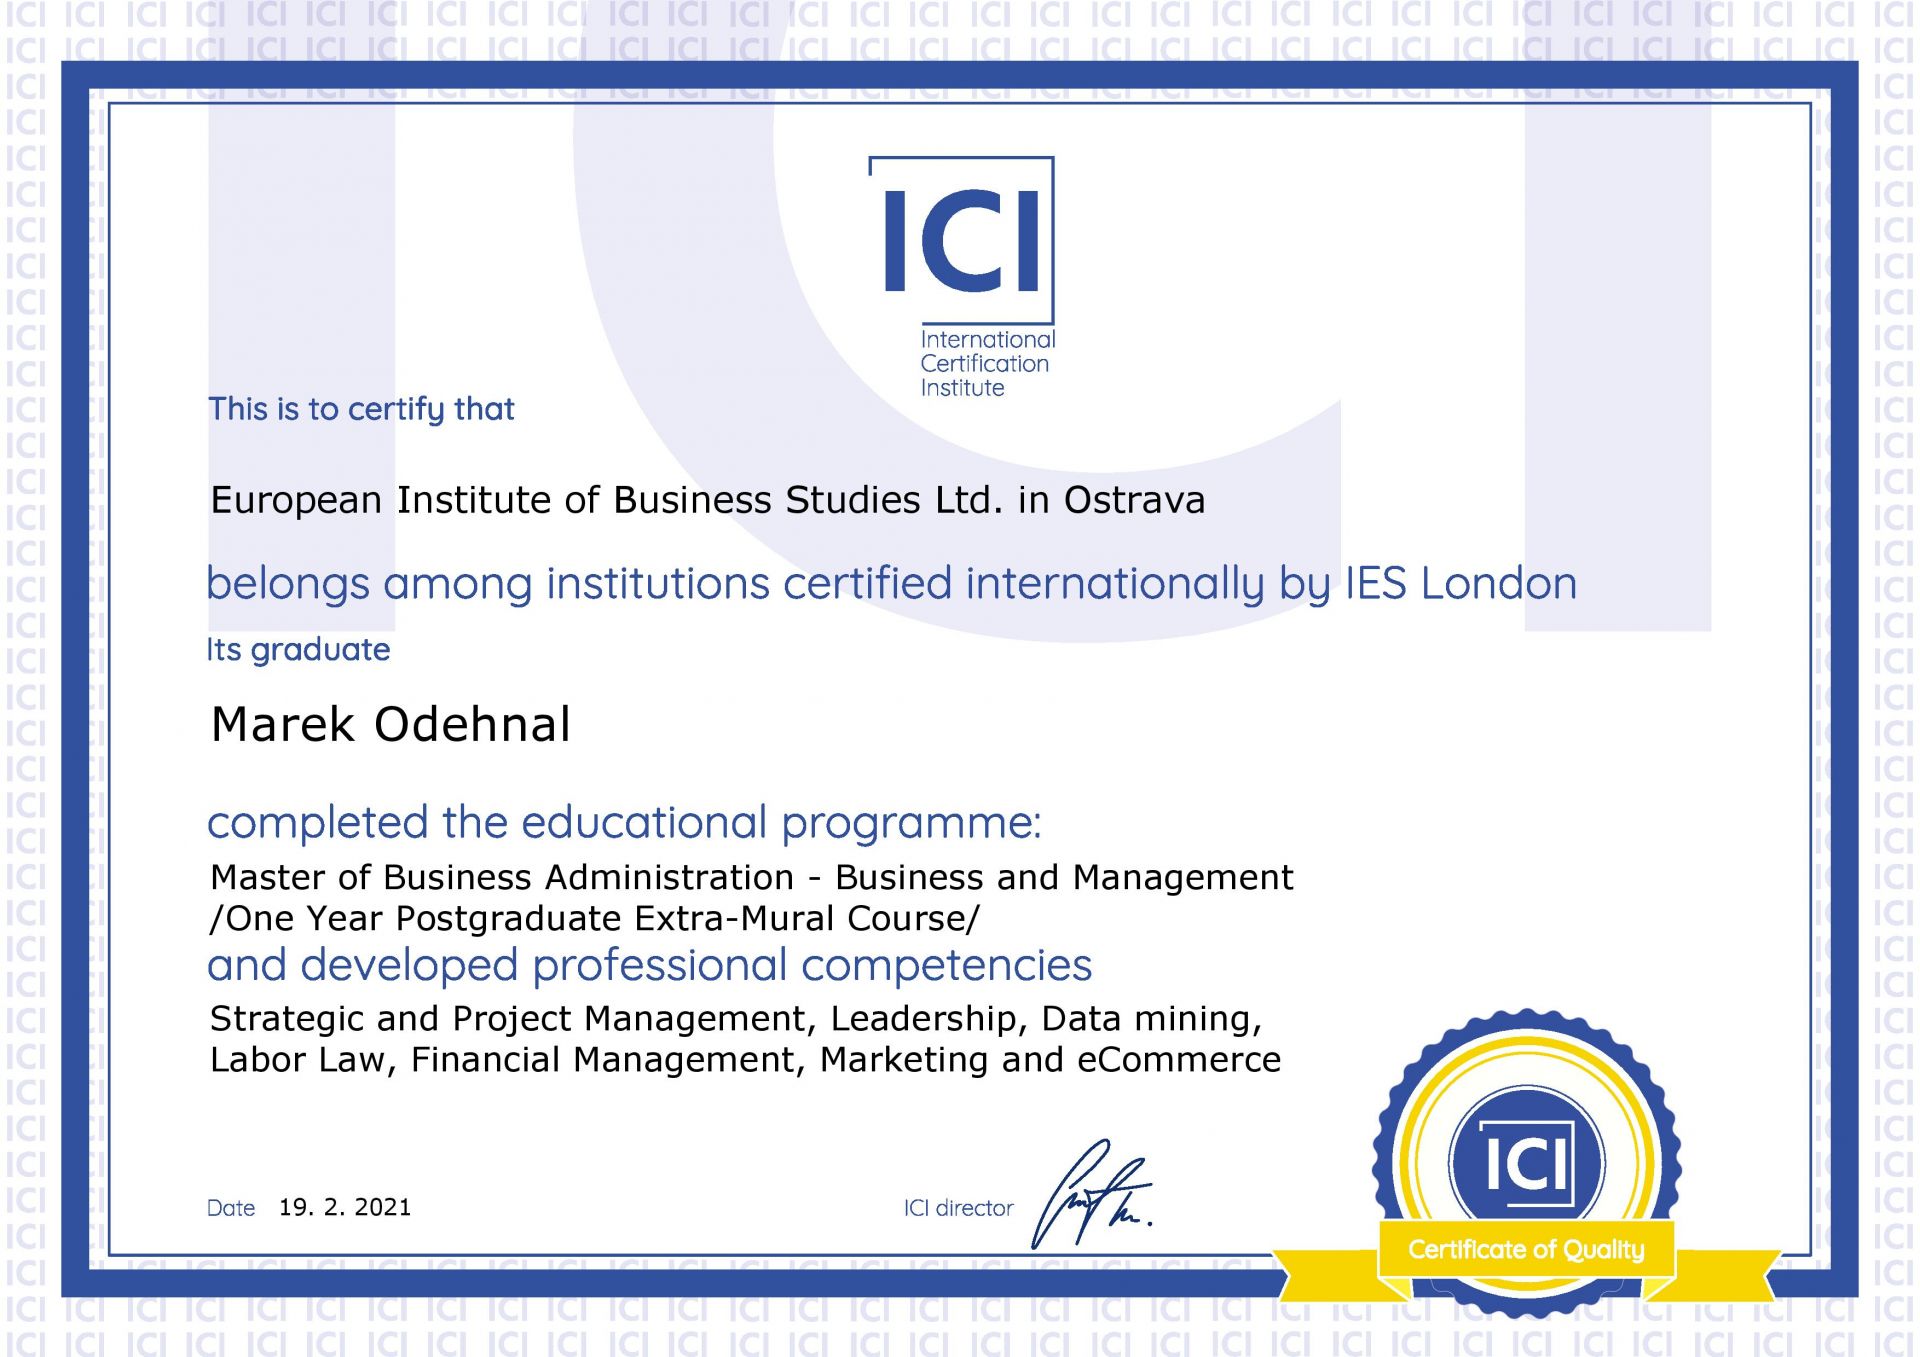 mba_international_certification_institute